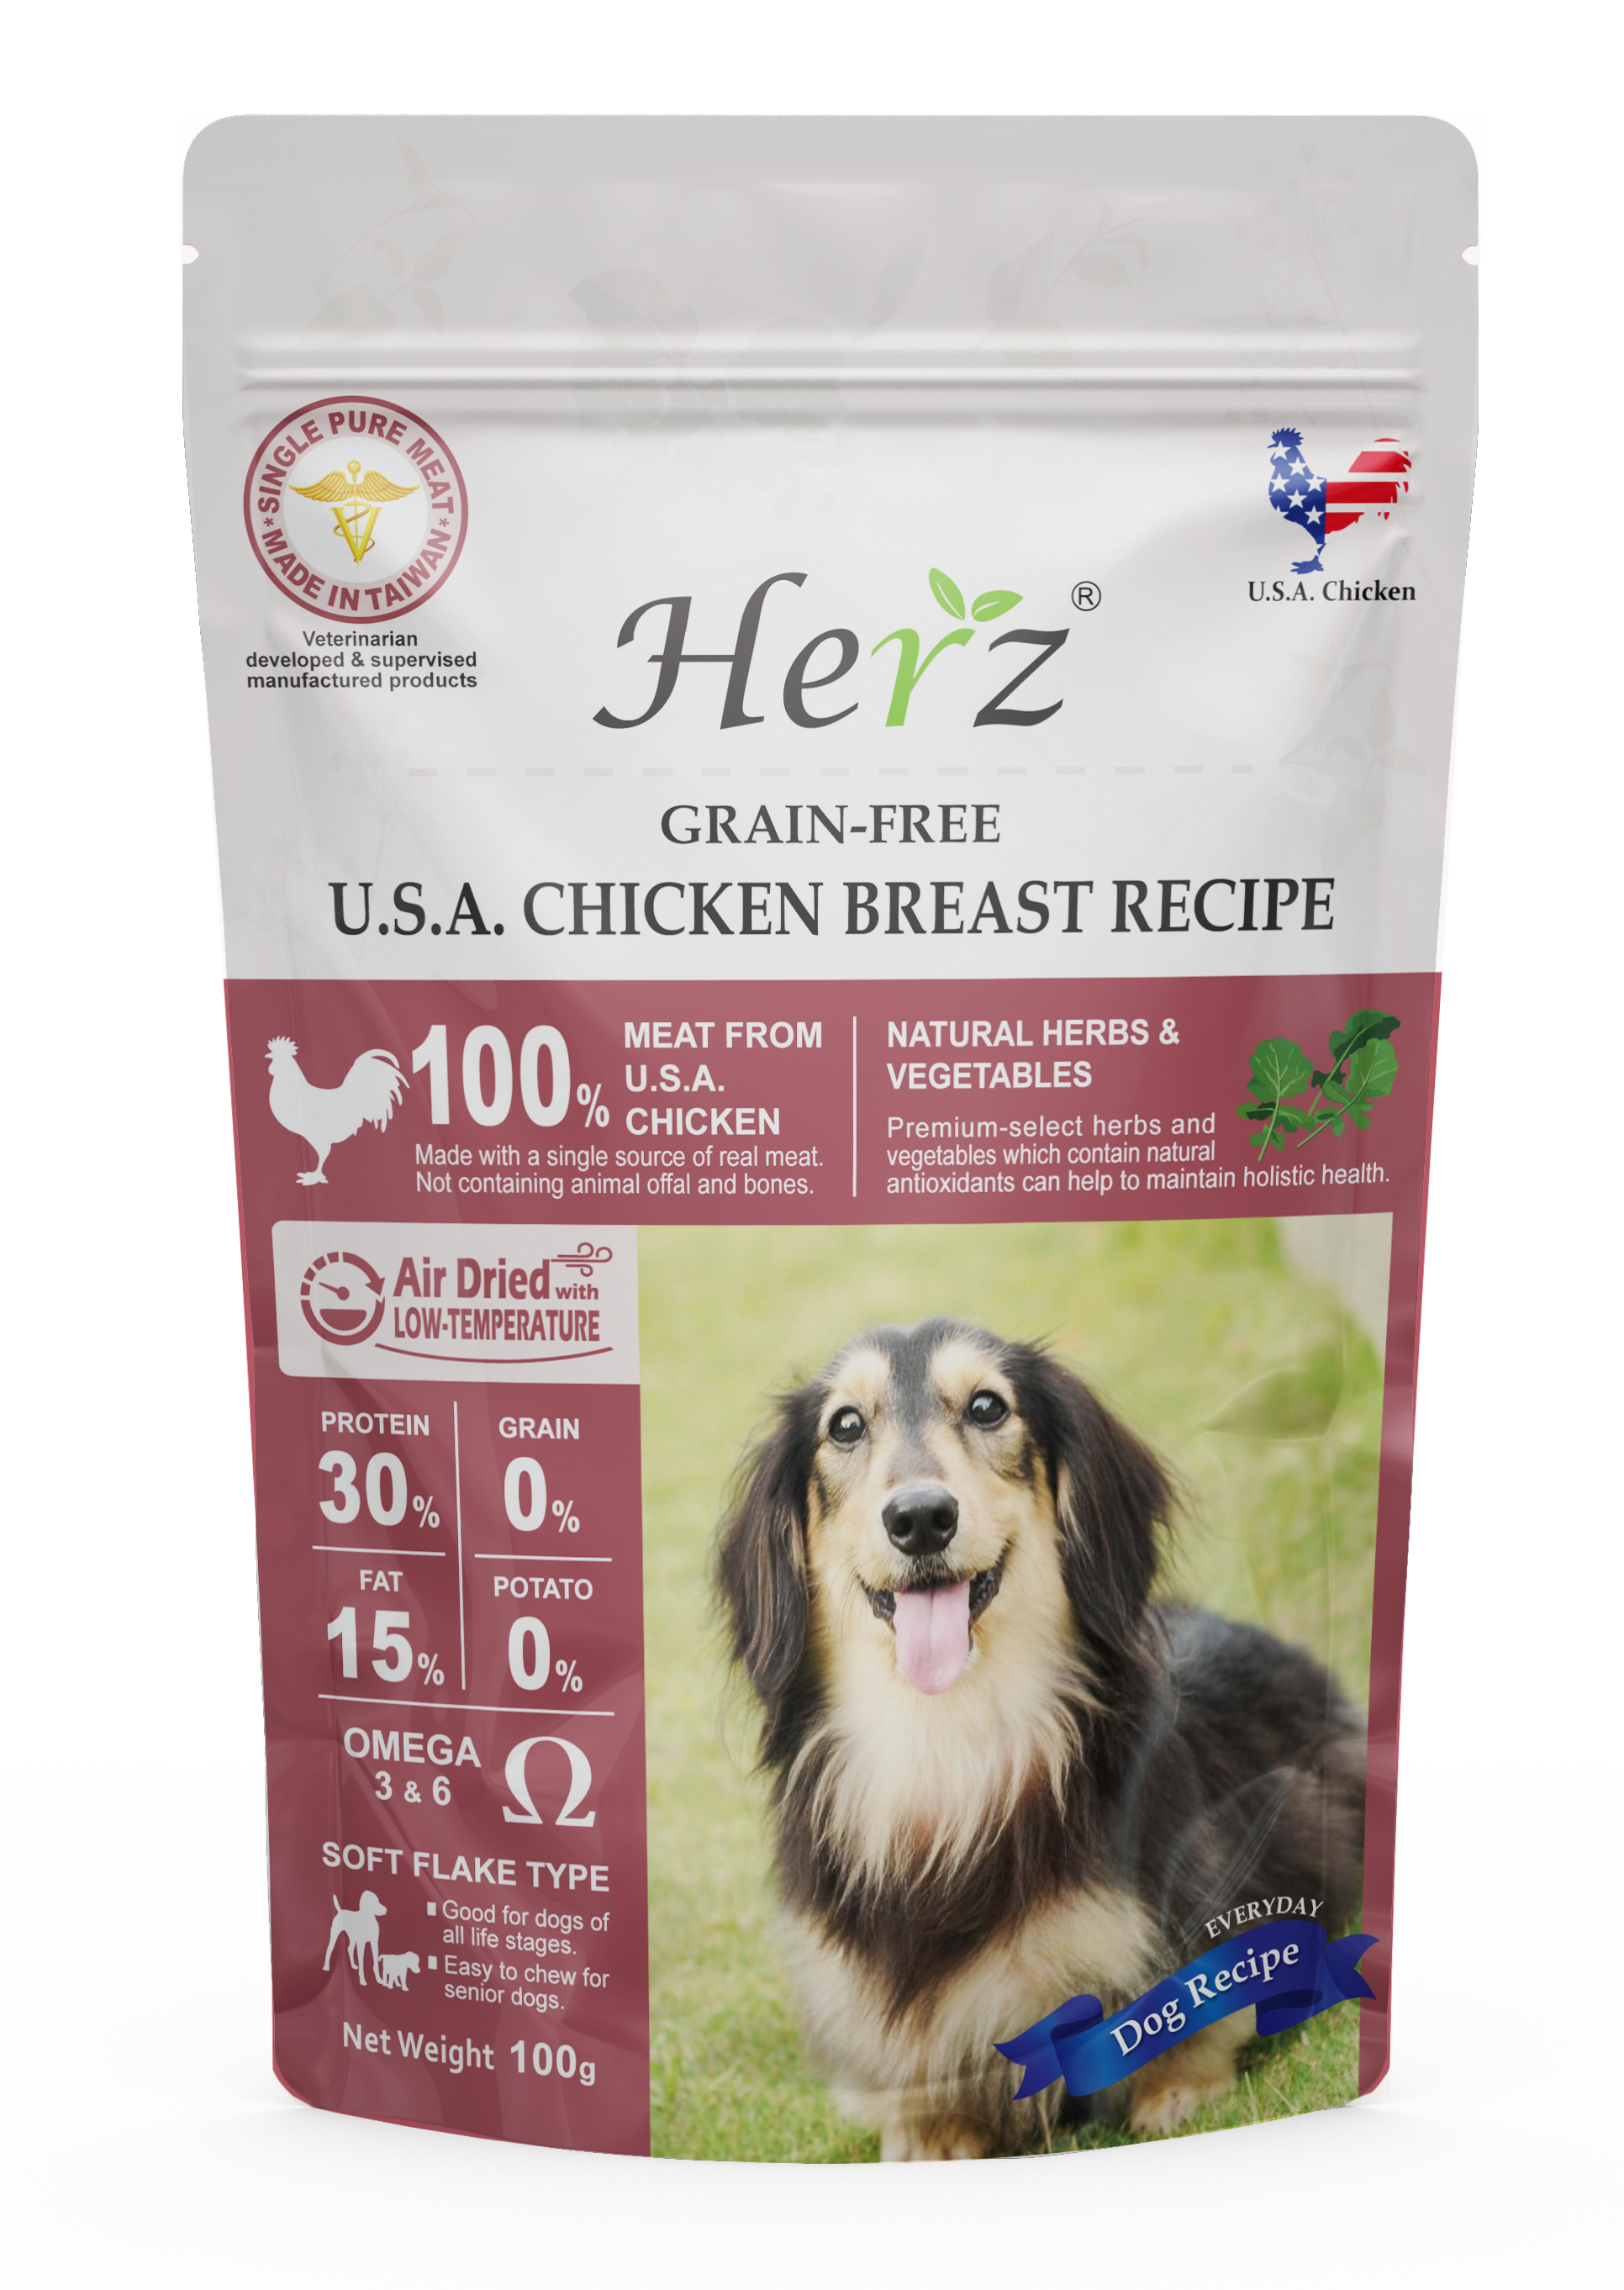 Herz Grain Free U.S.A Chicken Breast Recipe (100g)